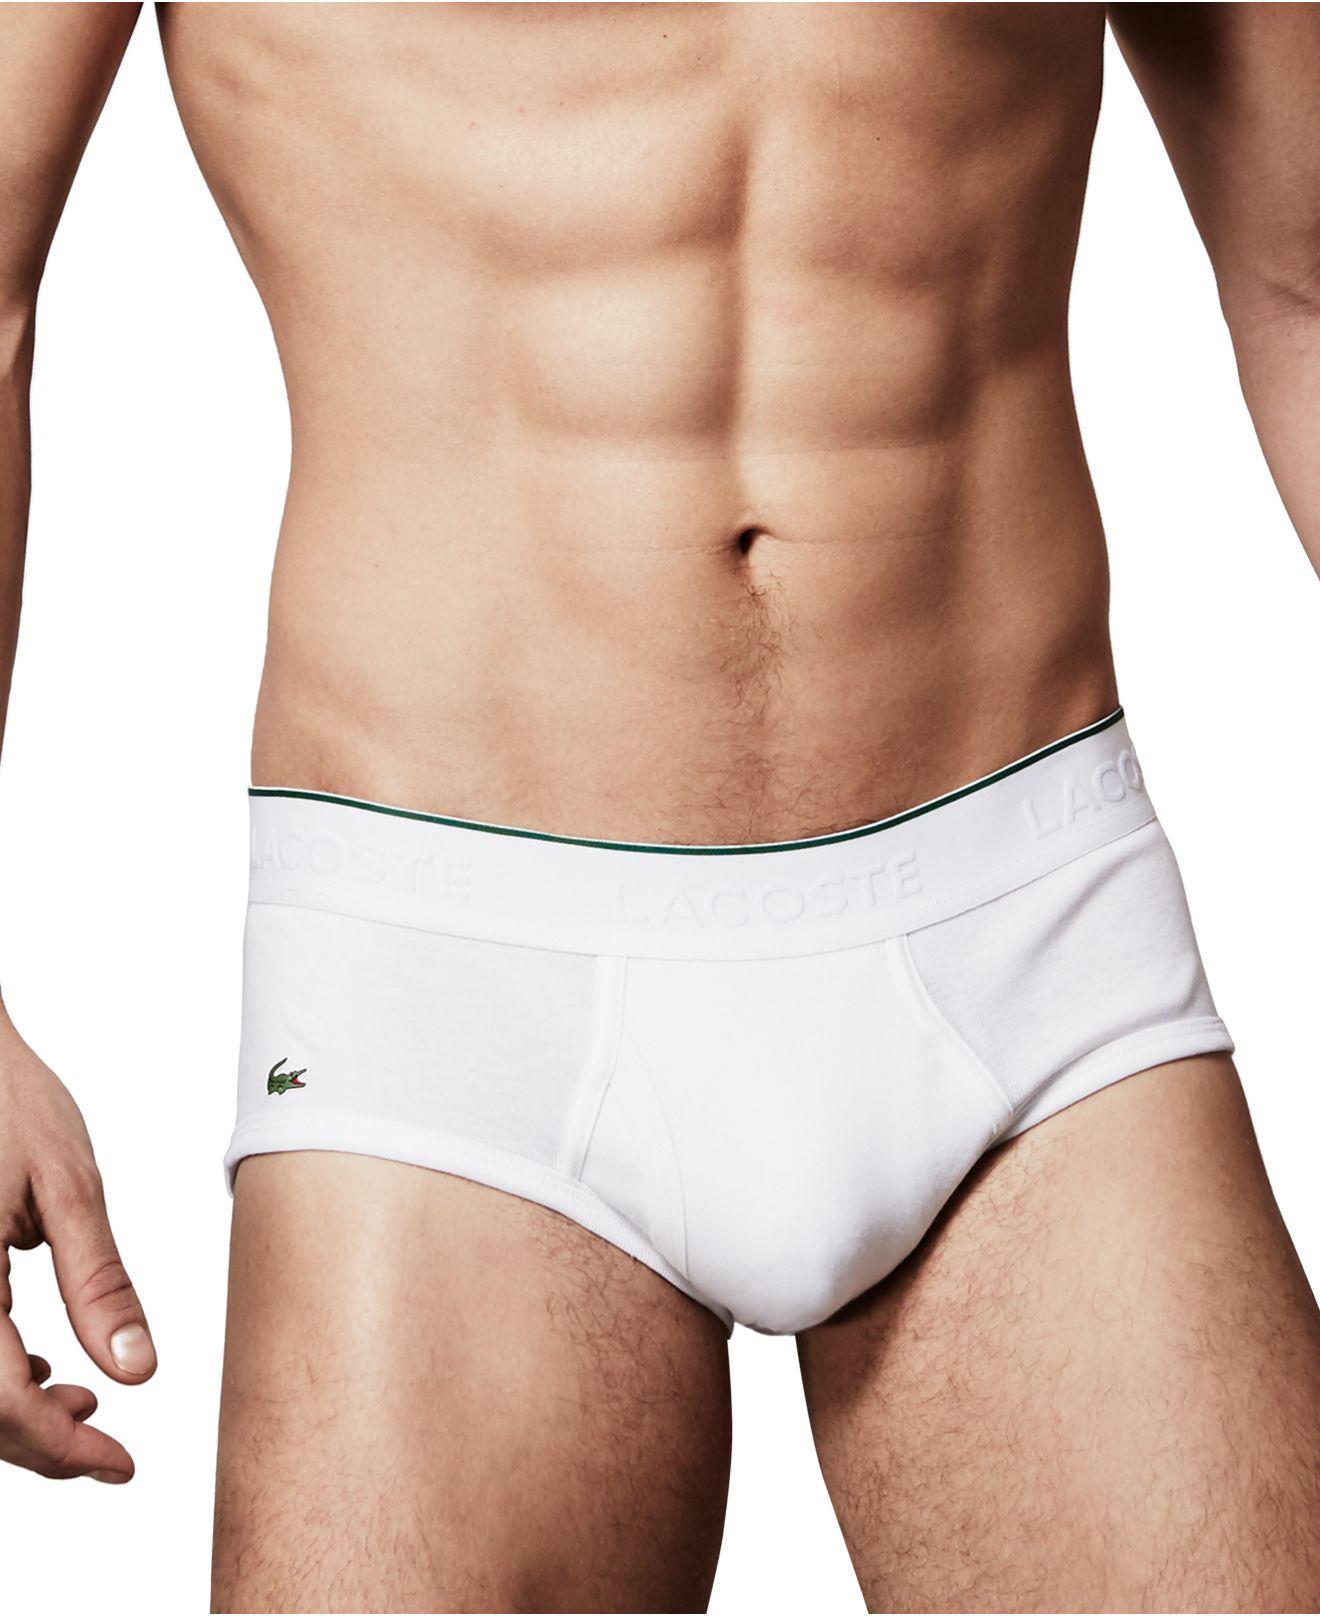 Lacoste 4-pack Brief Suprima Cotton Underwear in Gray for Men | Lyst